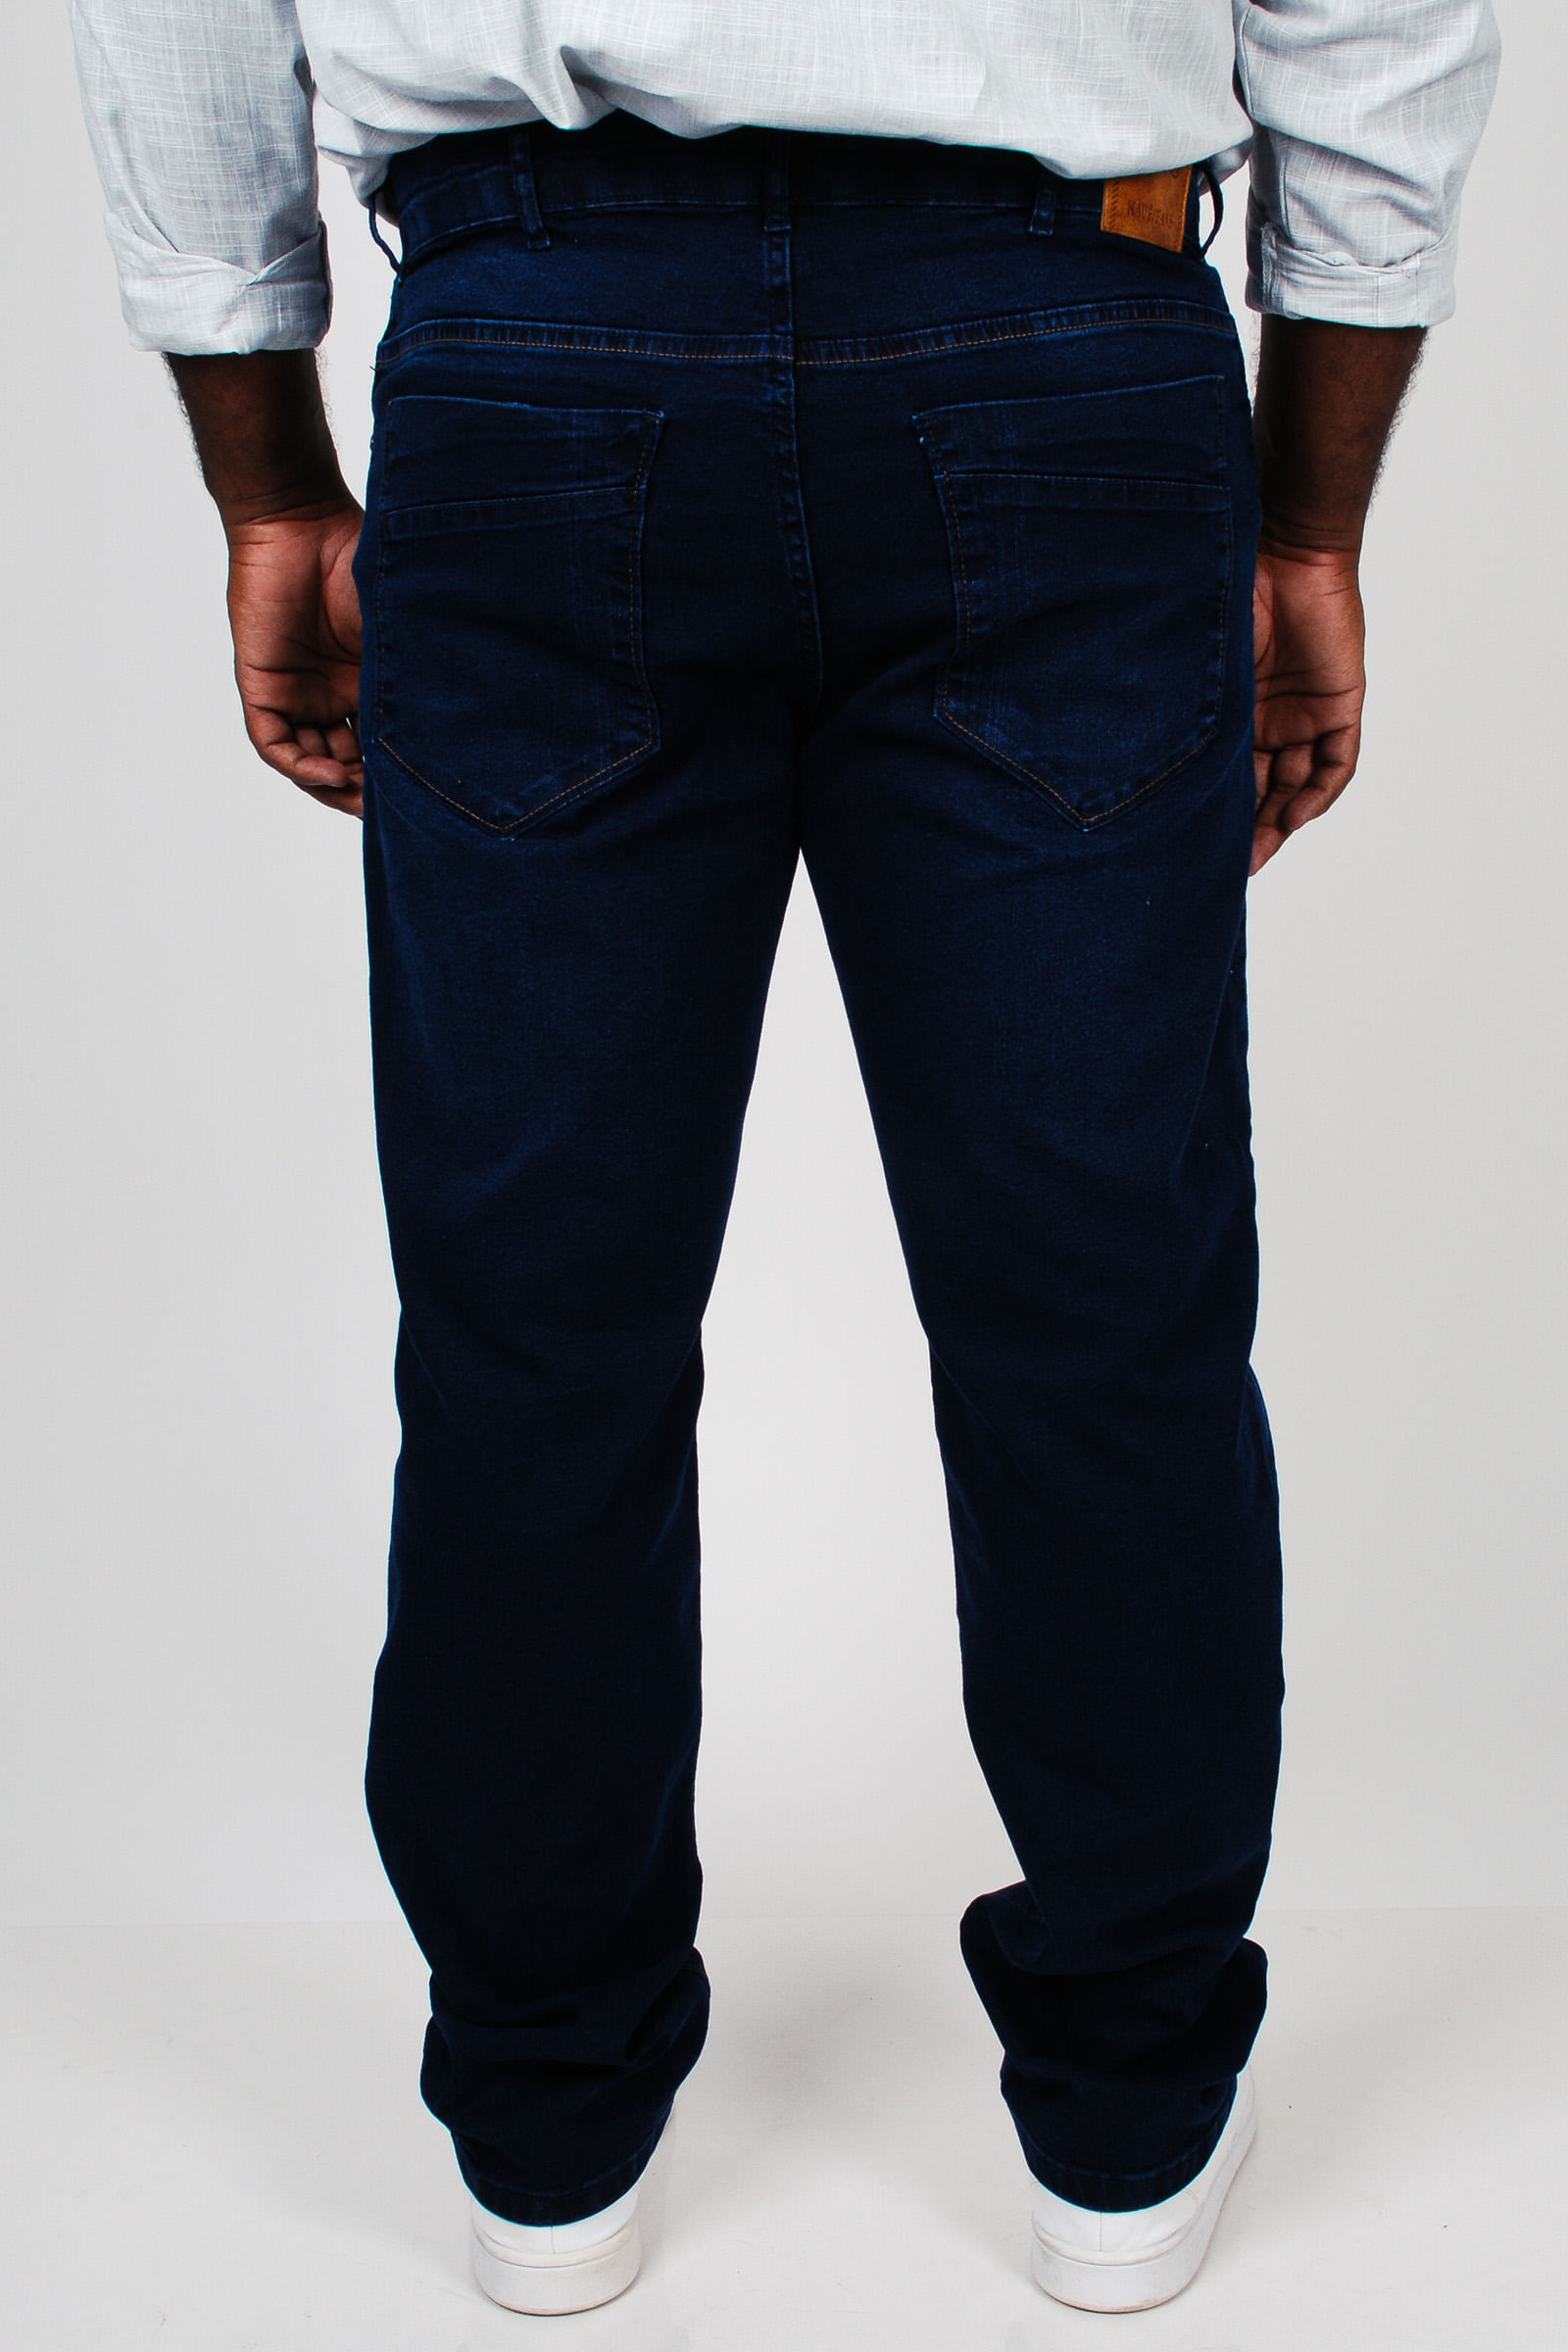 Calca-reta-jeans-masculina-plus-size_0102_4